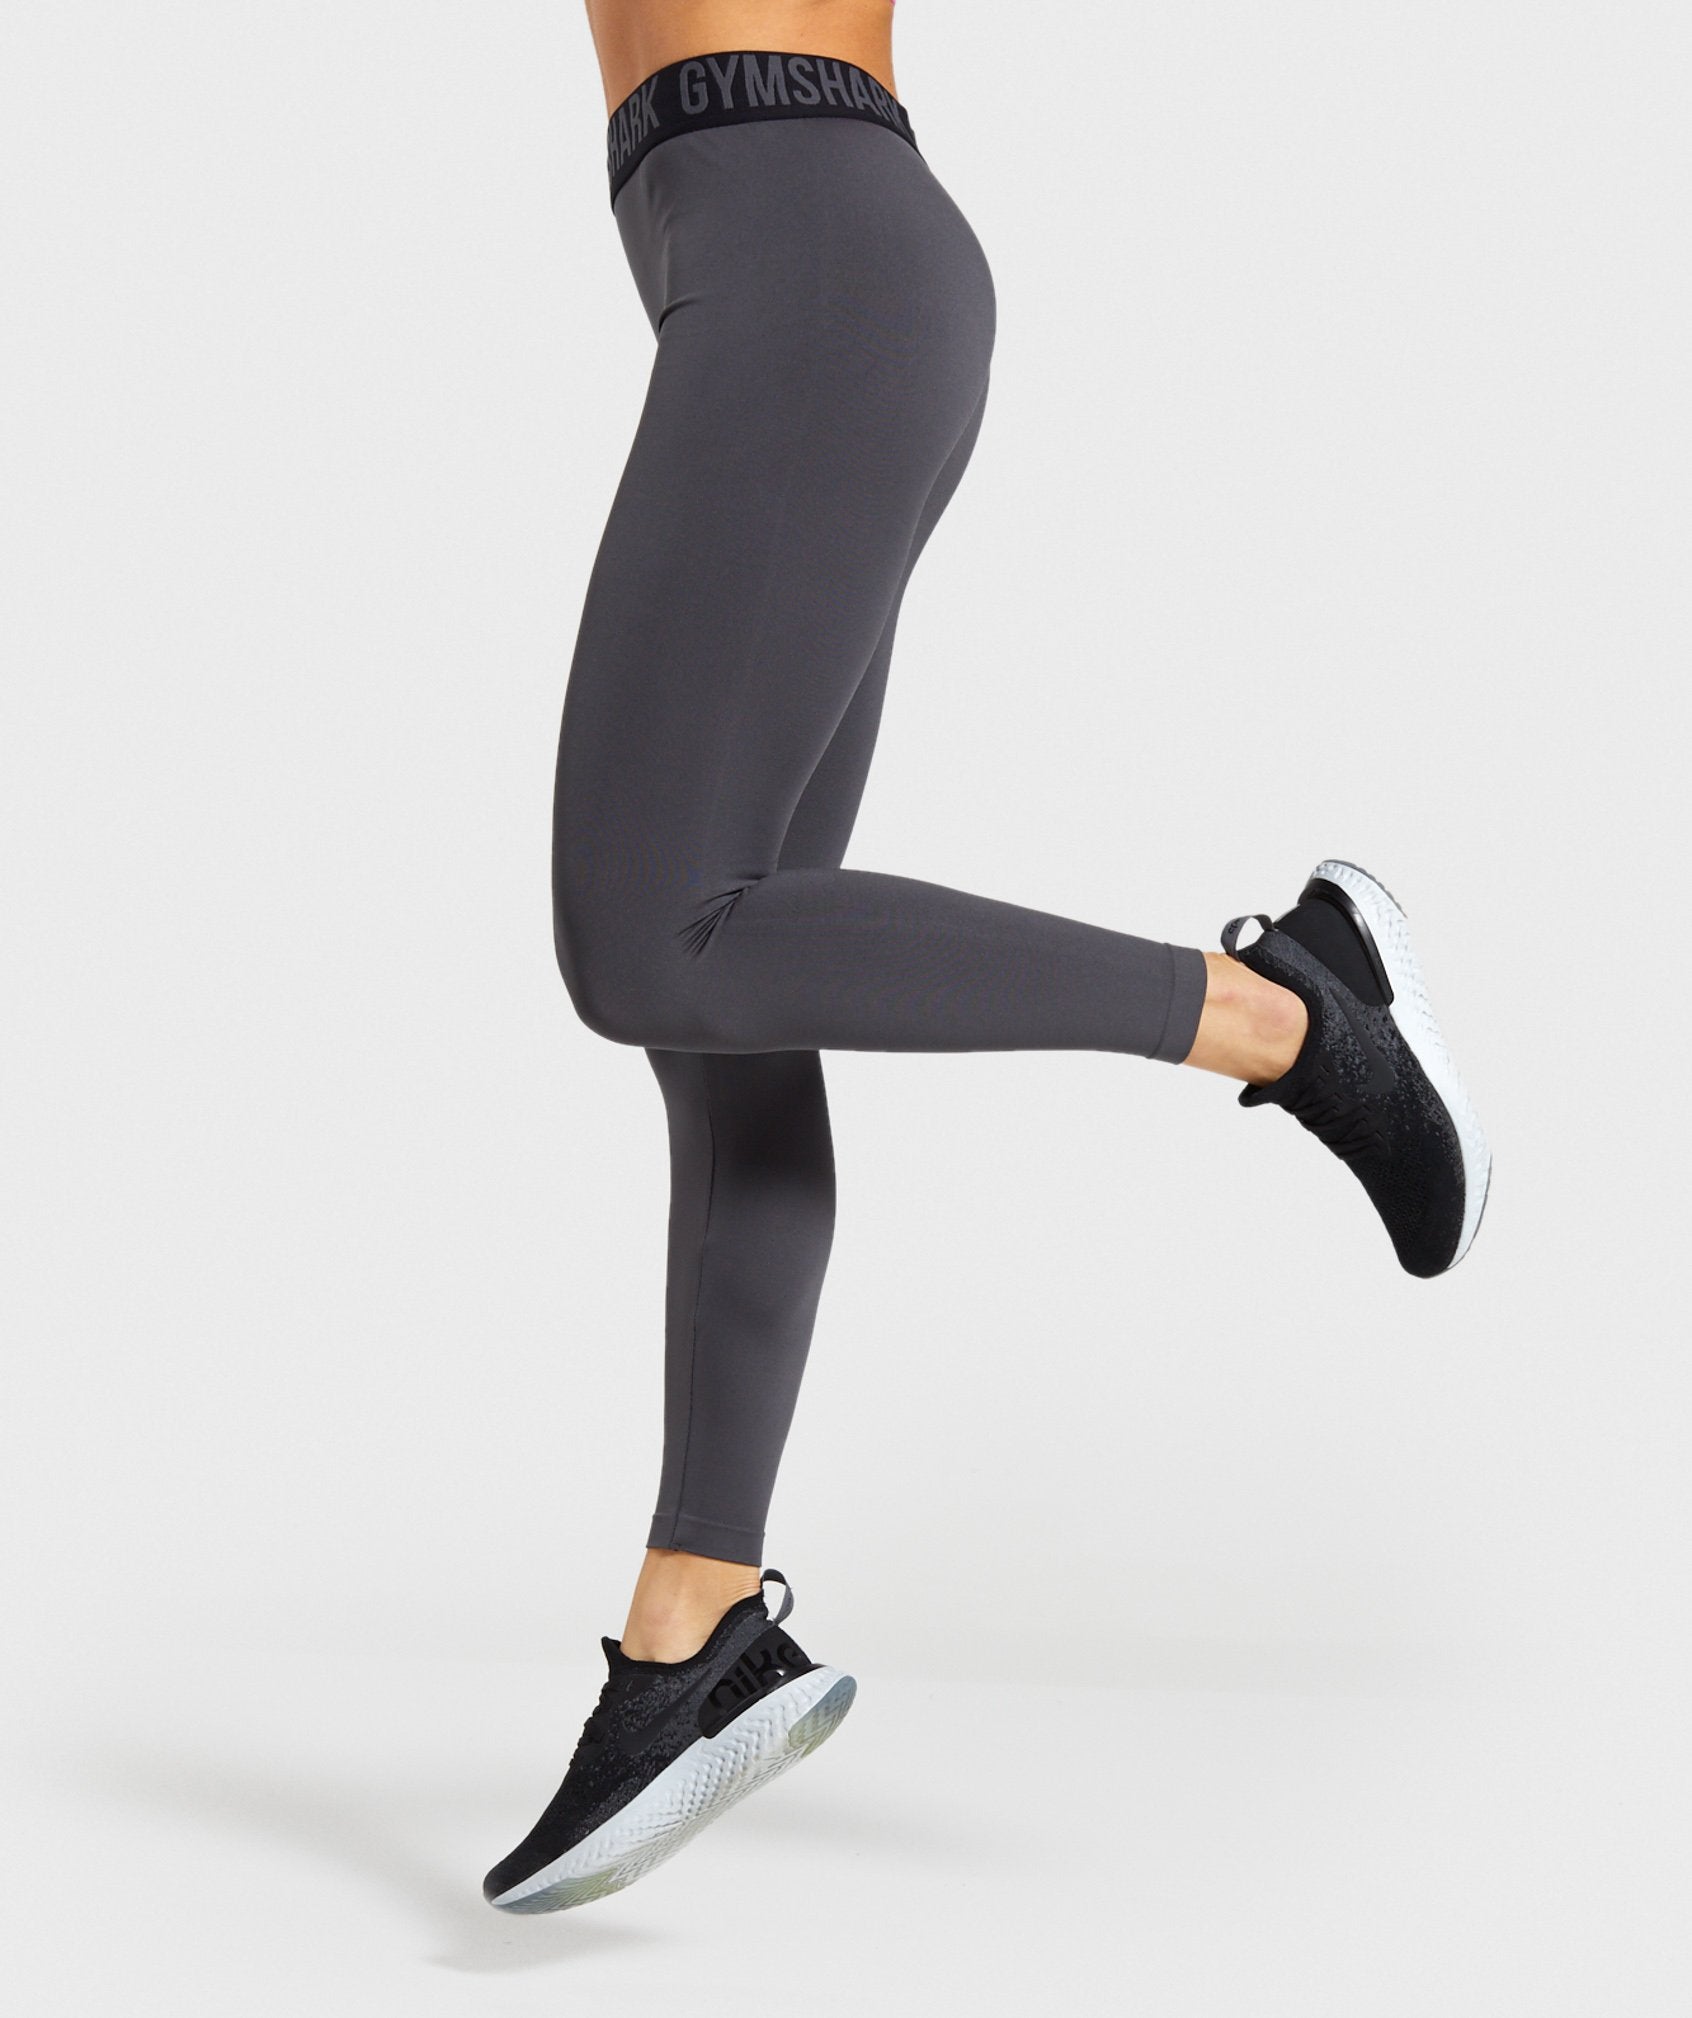 gymshark black gradient seamless leggings size XS, Women's Fashion